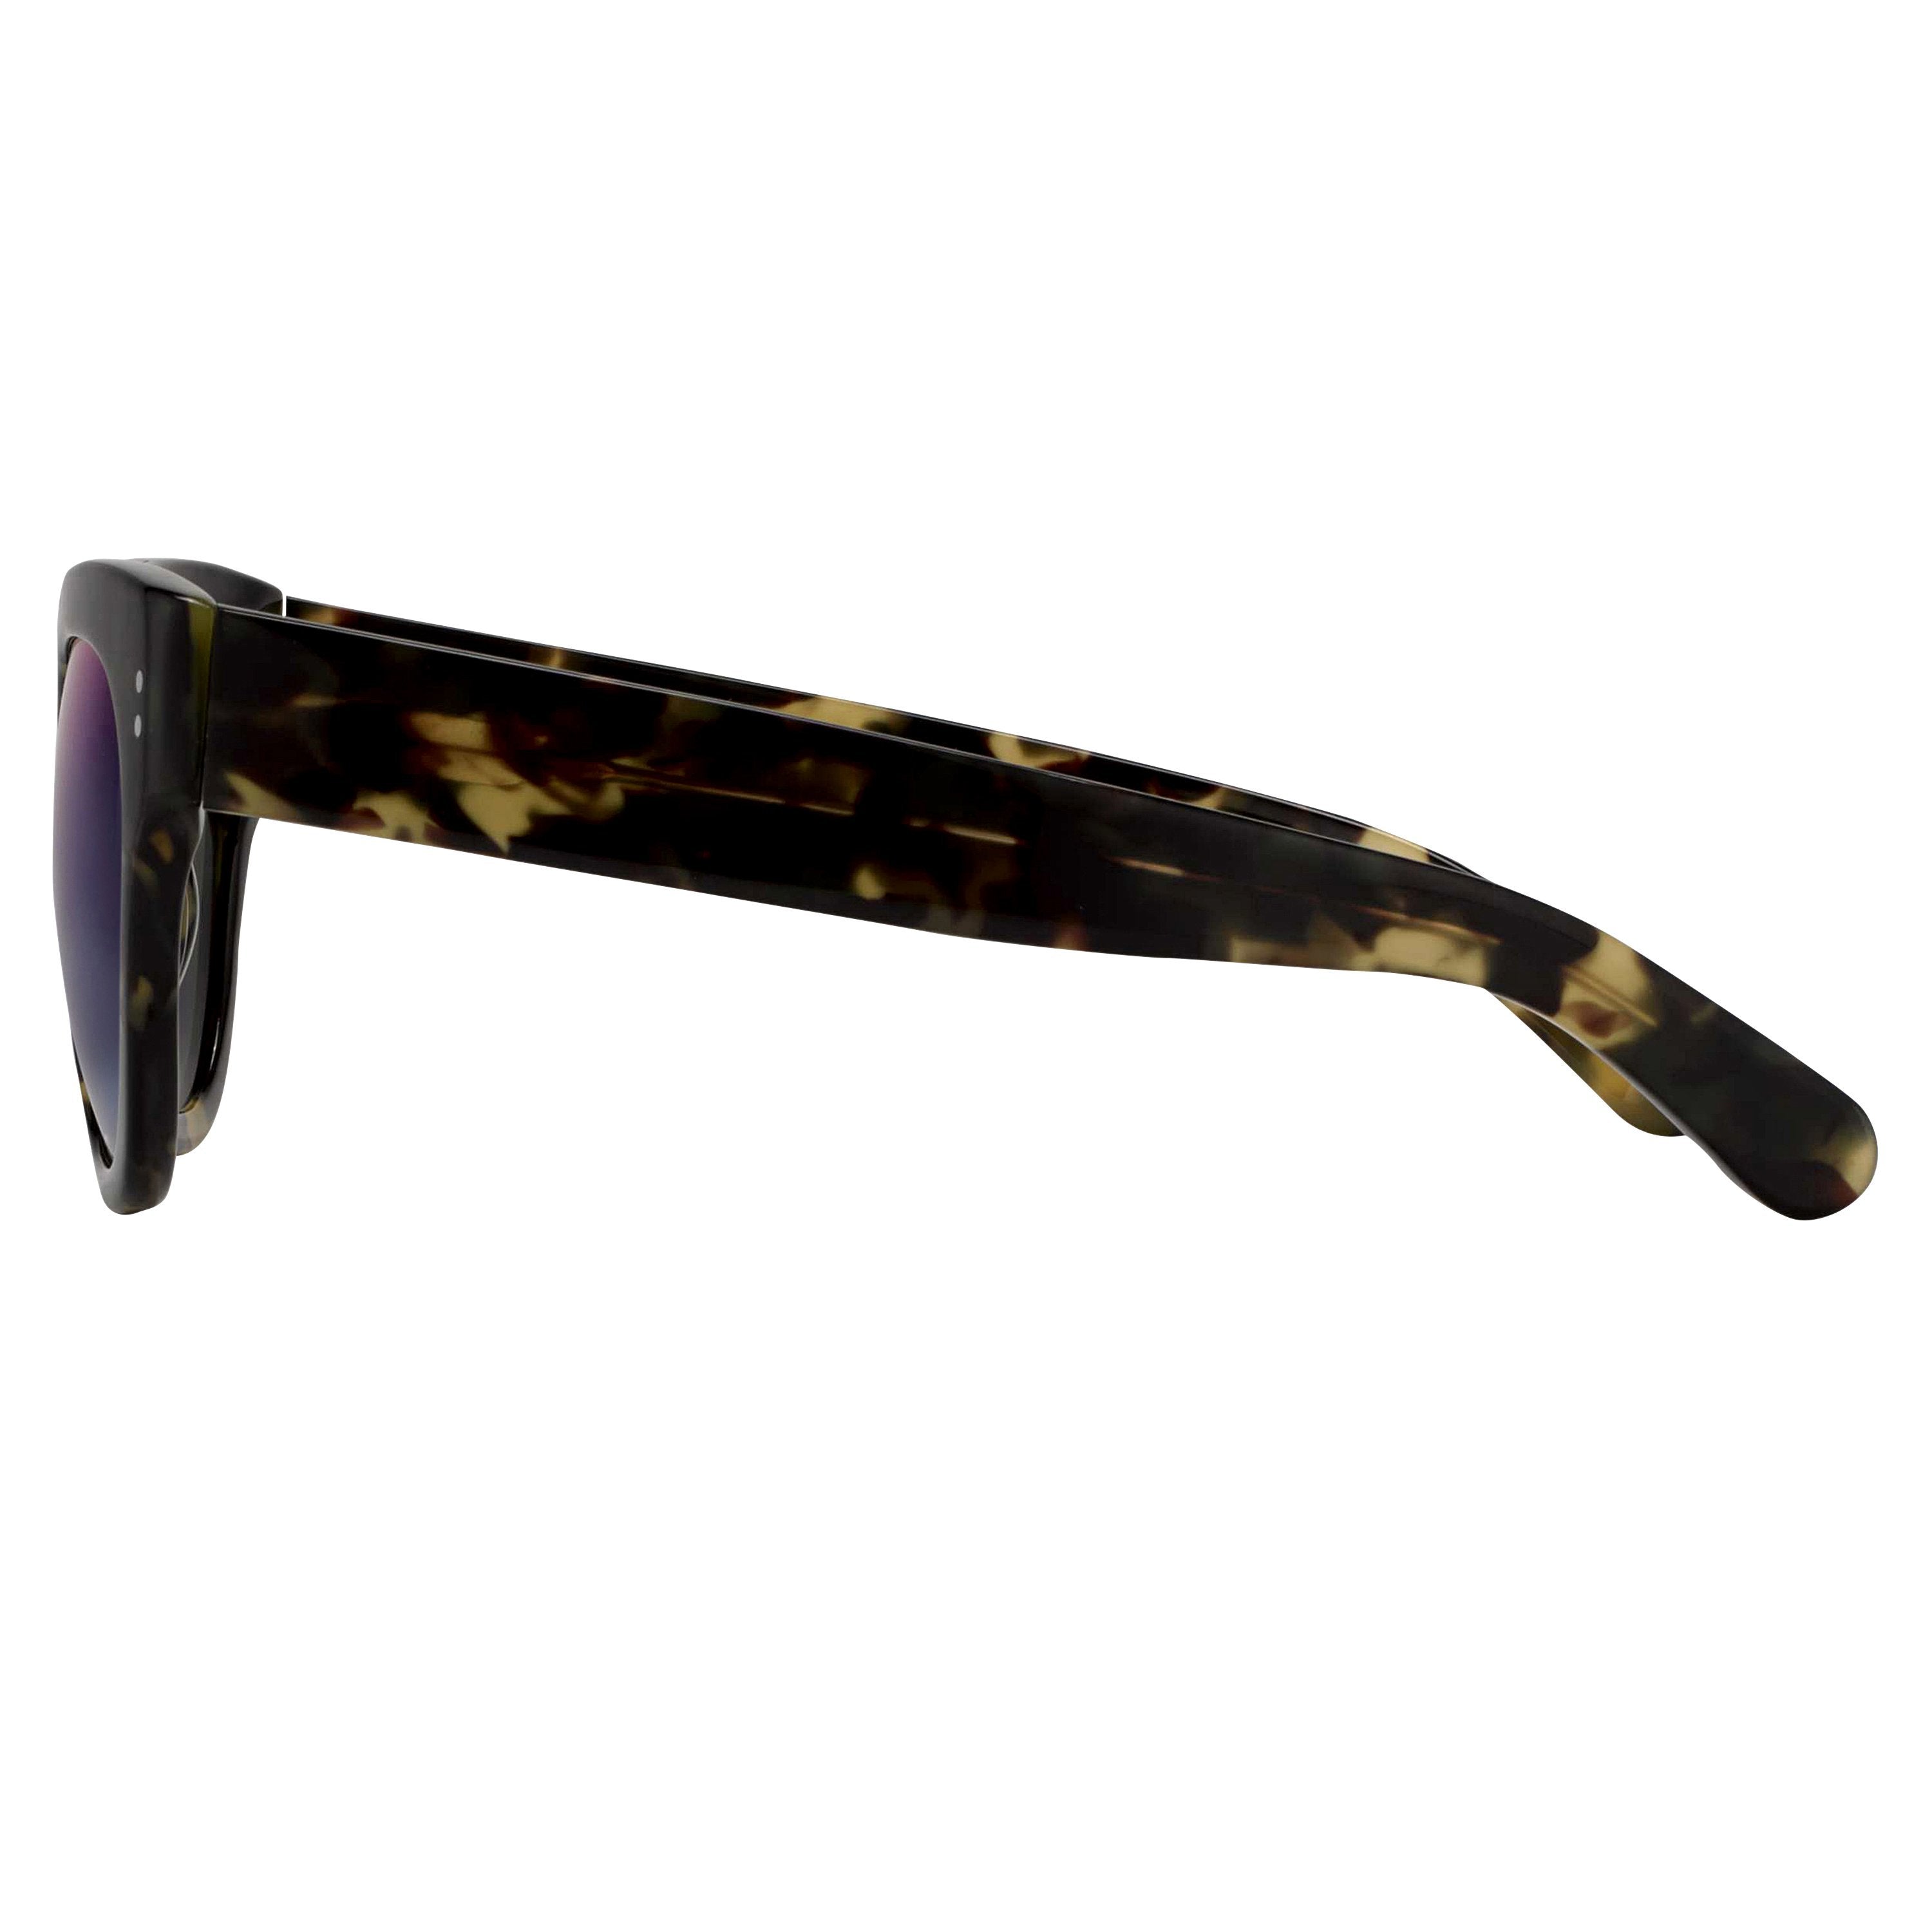 Color_EDM11C2SUN - Erdem 11 C2 D-Frame Sunglasses